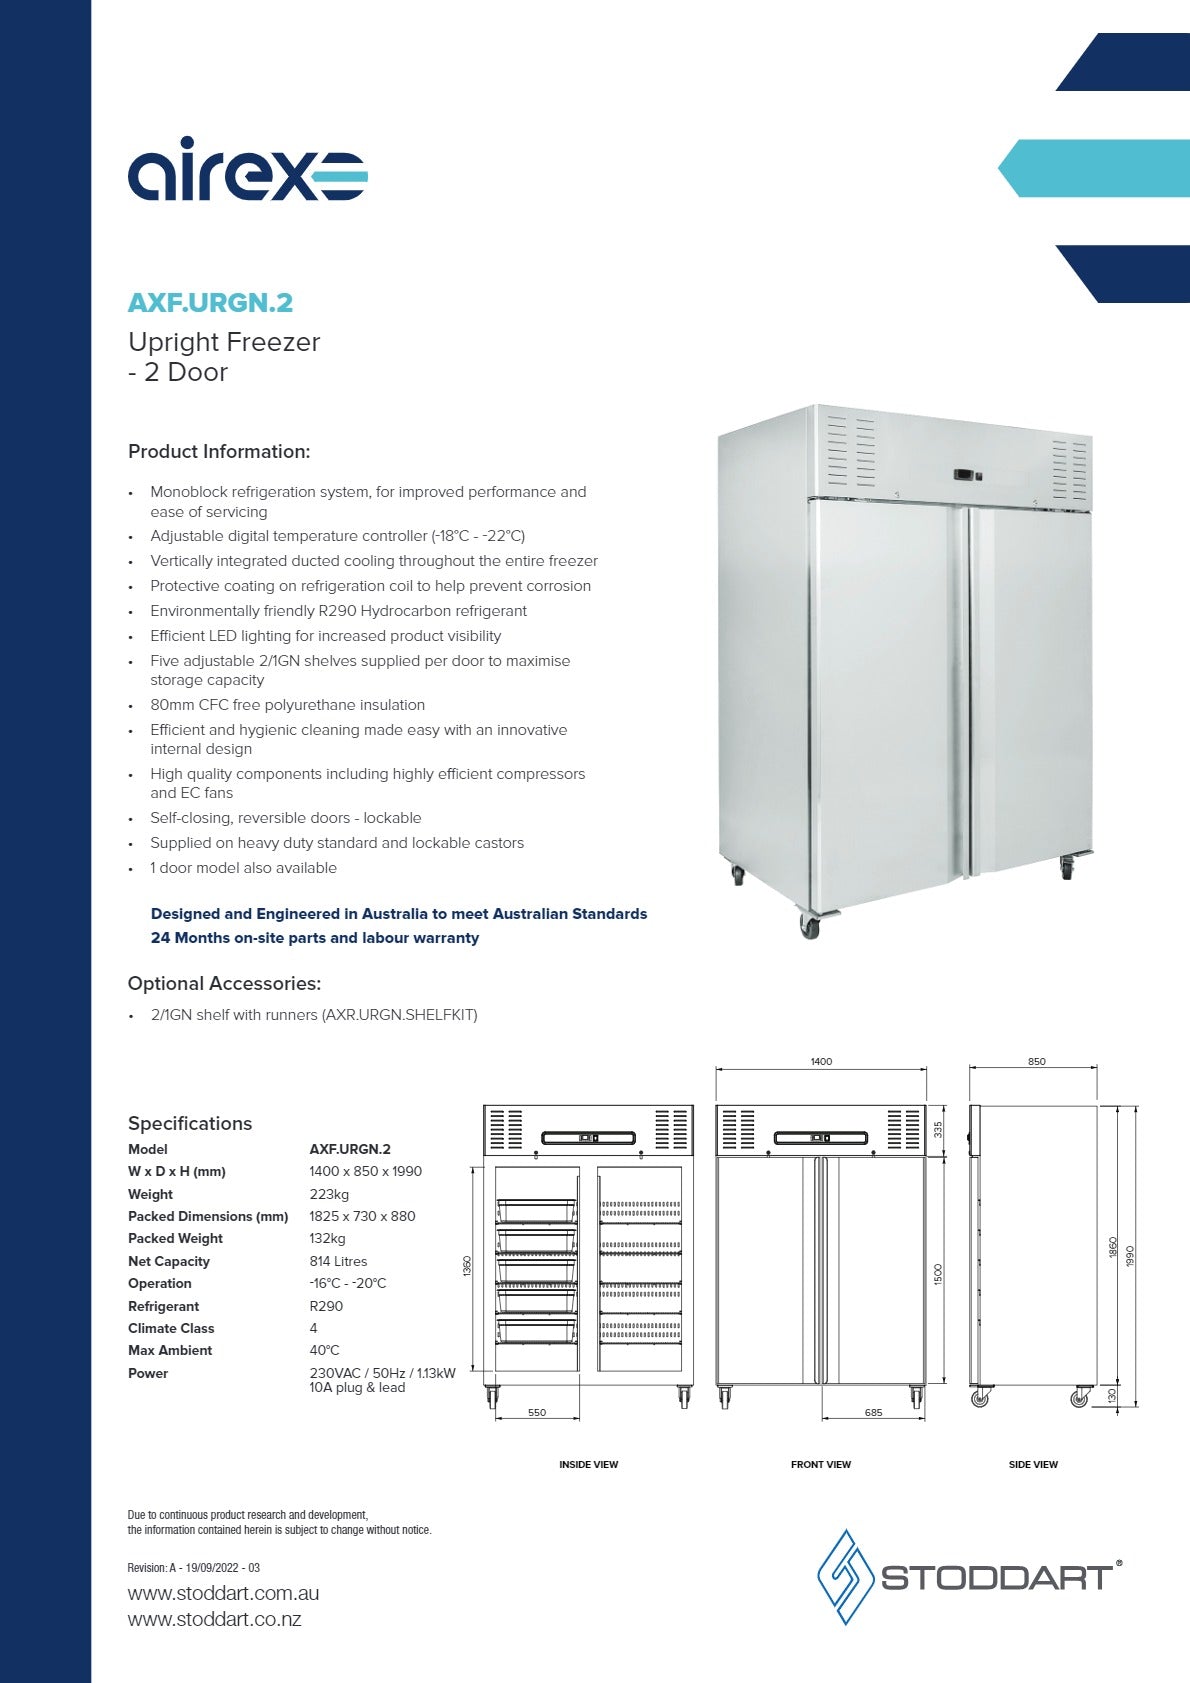 Thumbnail - Airex AXF.URGN.2 - 2 Door Upright Freezer